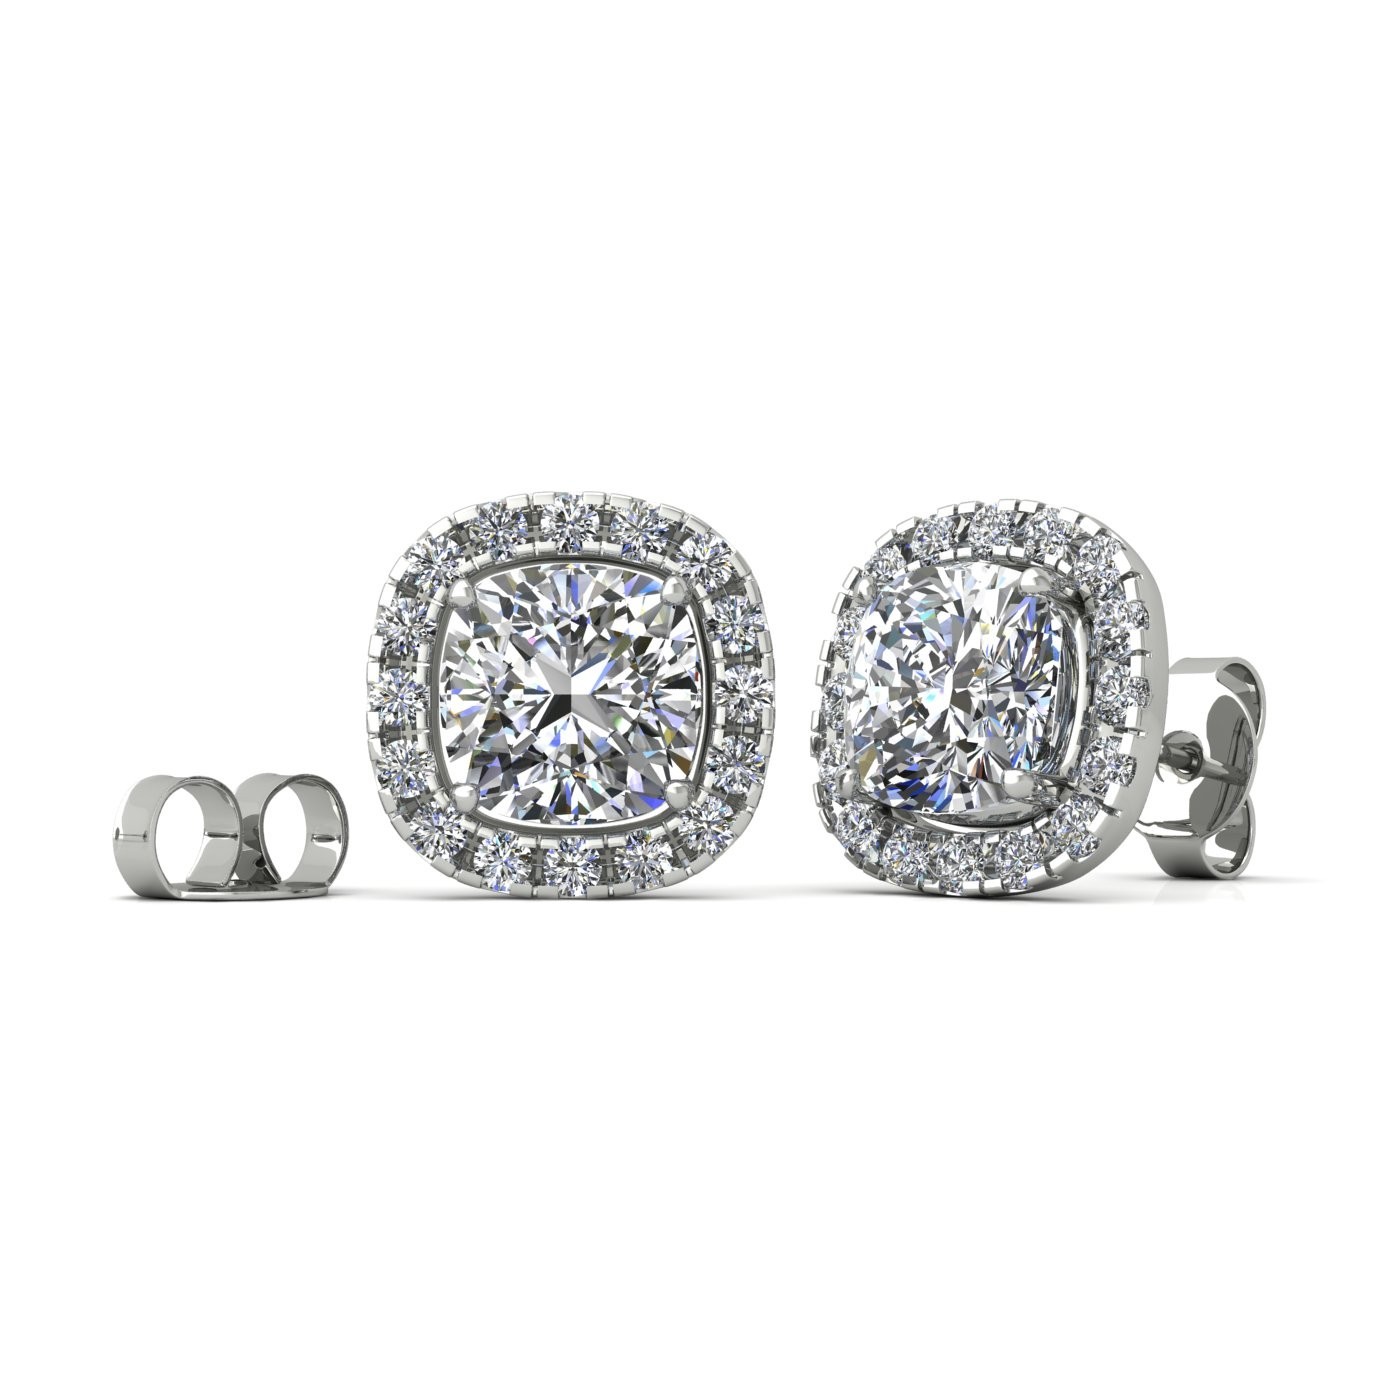 18k white gold  1,0 ct each (2,0 tcw) 4 prongs cushion shape diamond earrings with diamond pavÉ set halo